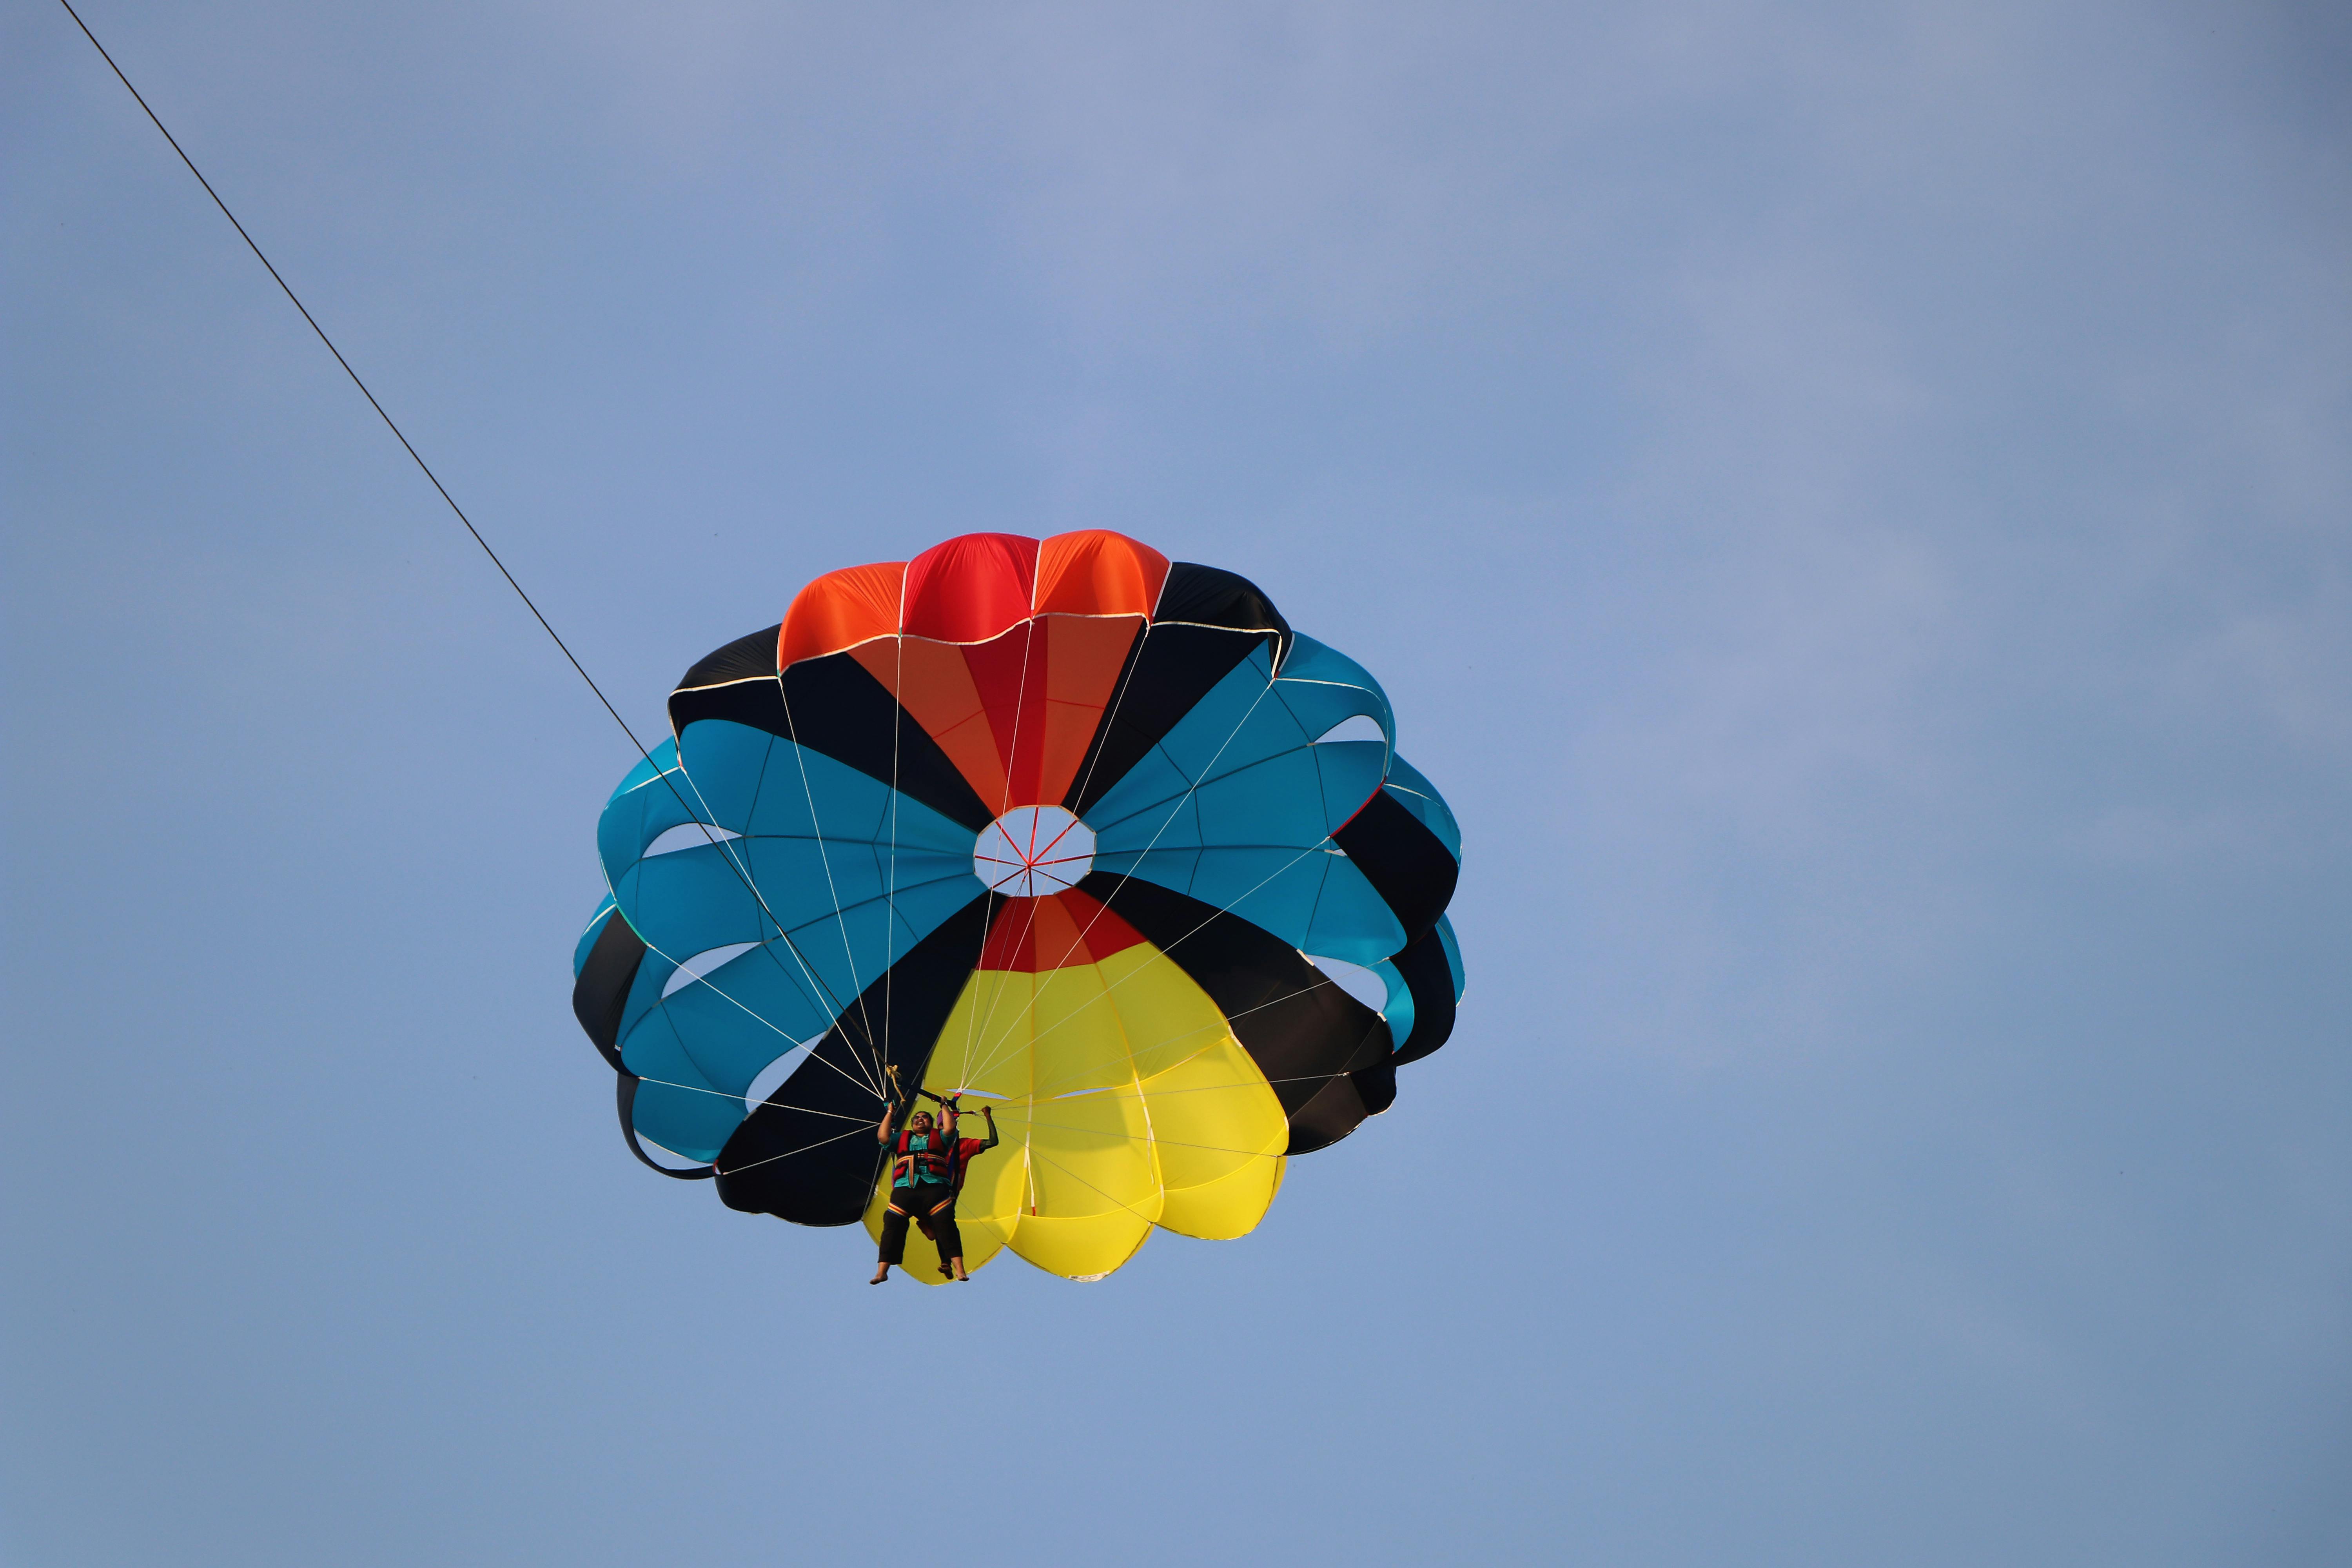 Free stock photo of #parasailor #sailing #inair #air #colorful #fly